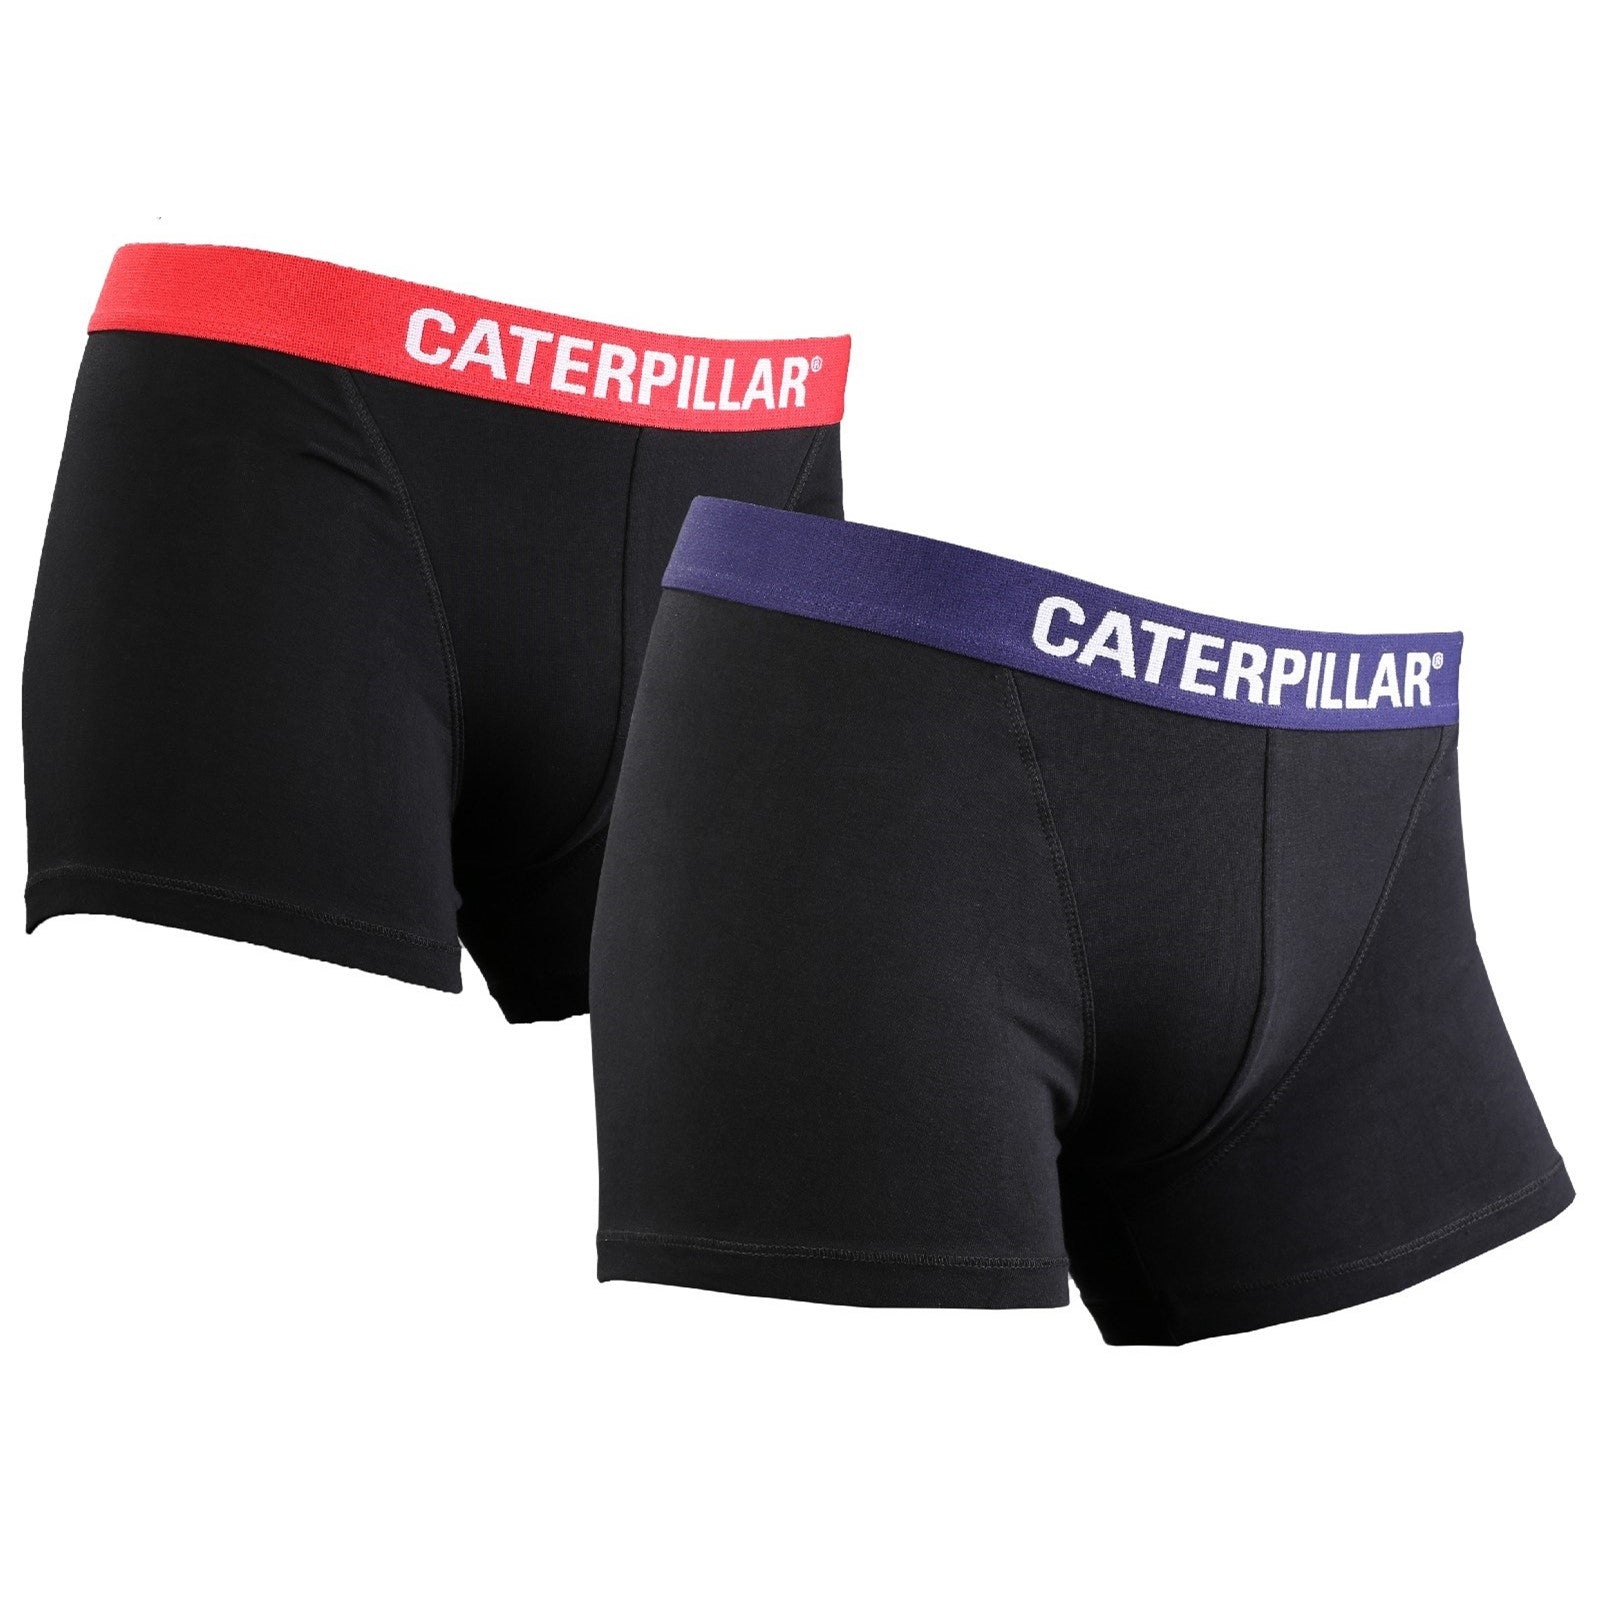 Caterpillar Boxer Shorts 2-Pack